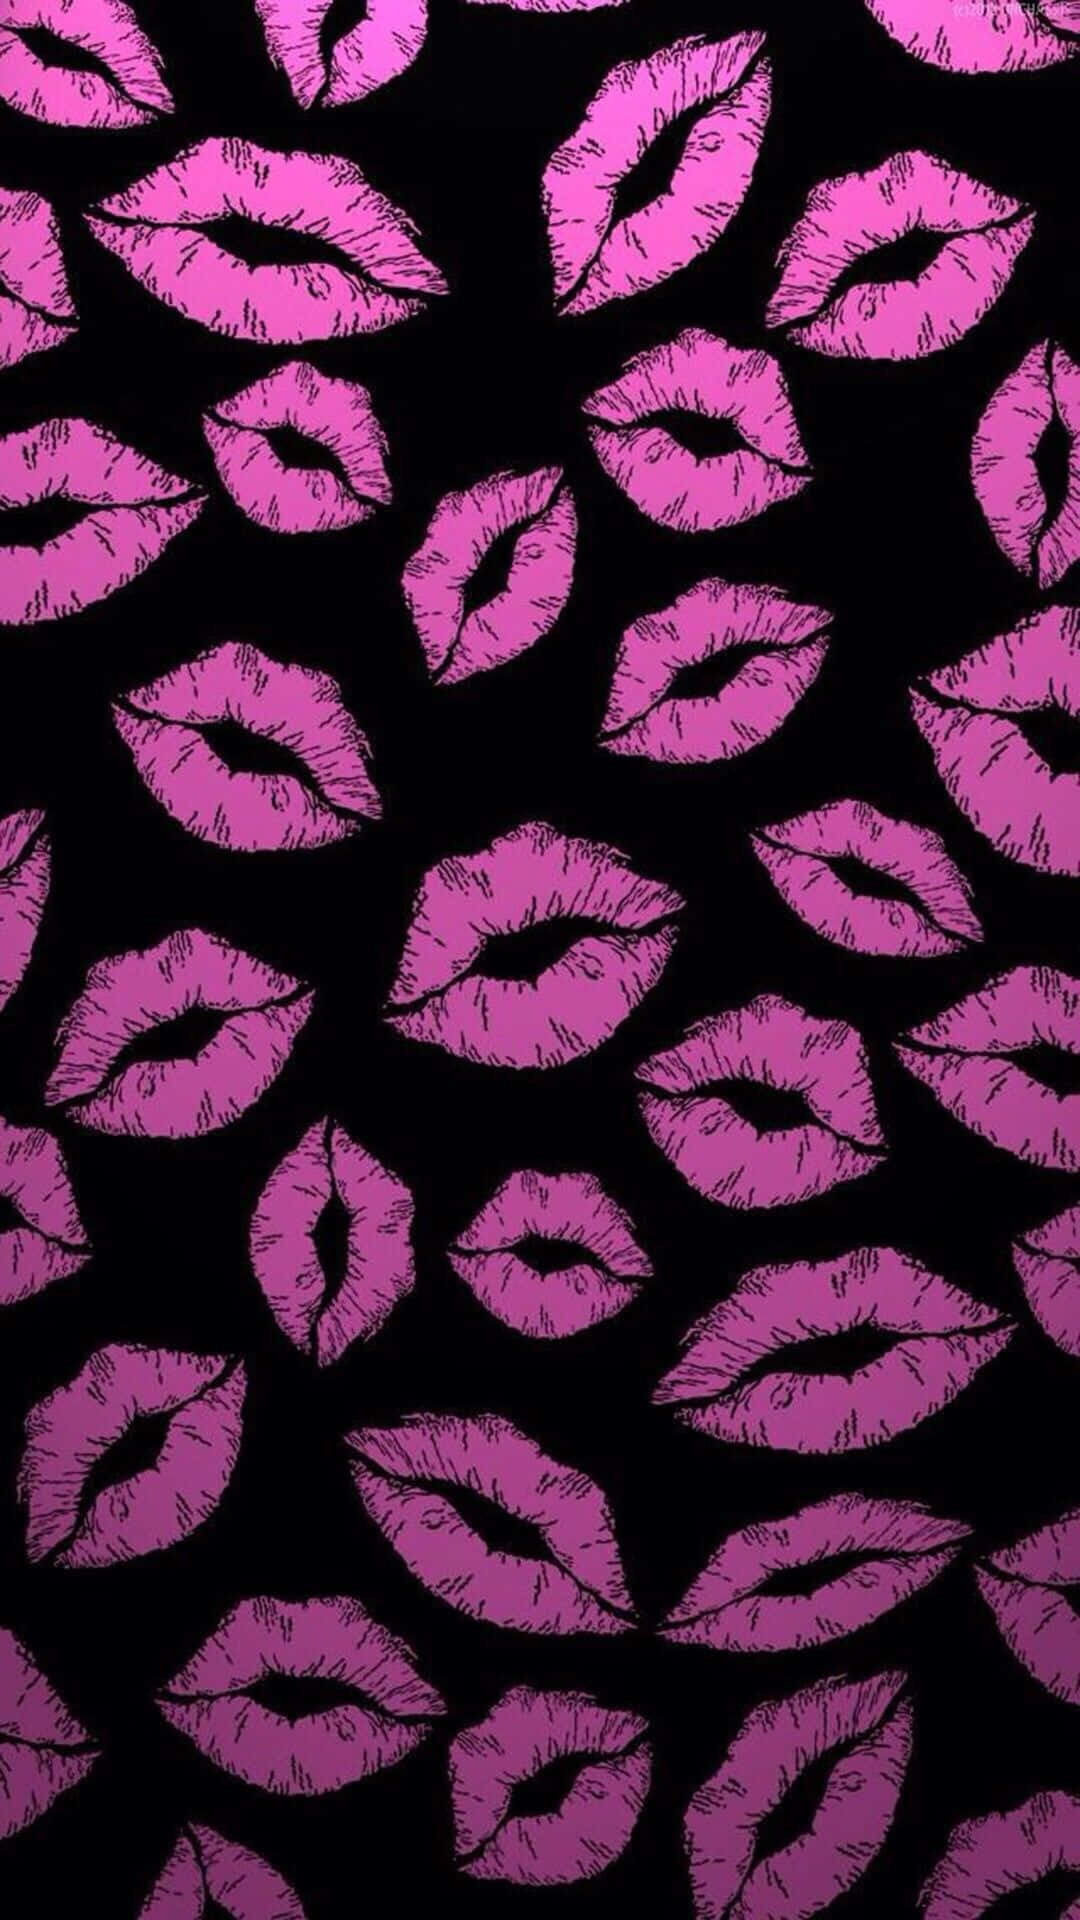 Irresistible Pink Lips Wallpaper